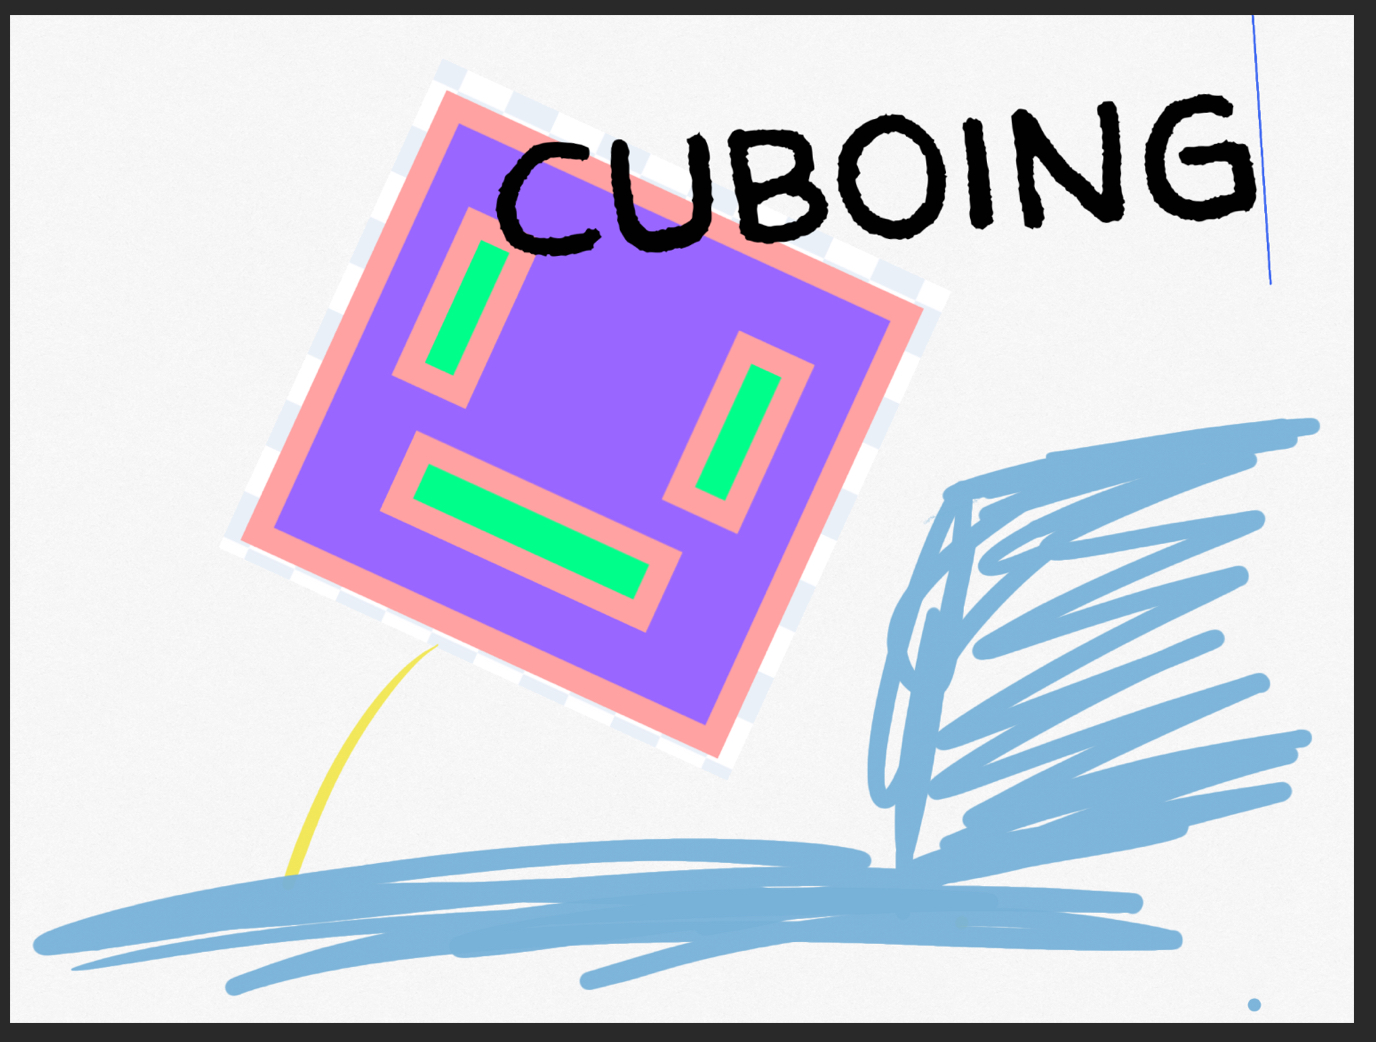 Cuboing